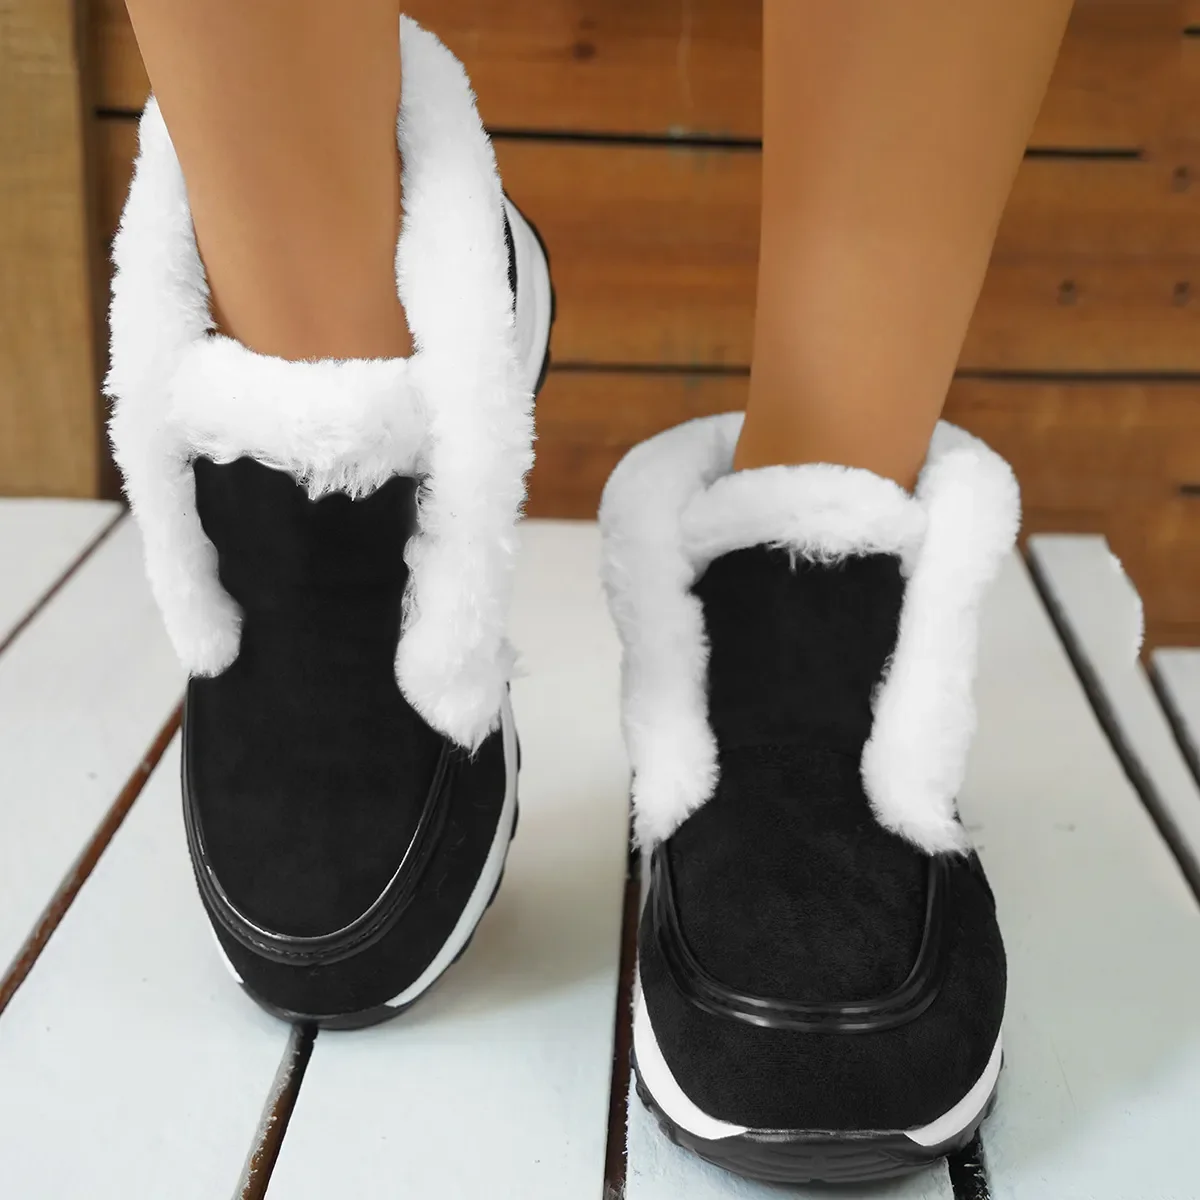 Ženy Topánky Zimné Čižmy Nové Kvalitné Teplé Oblečenie Zimné Topánky Dámy Bytov Náklon Pohodlie Módne Semiš Plátenné Topánky